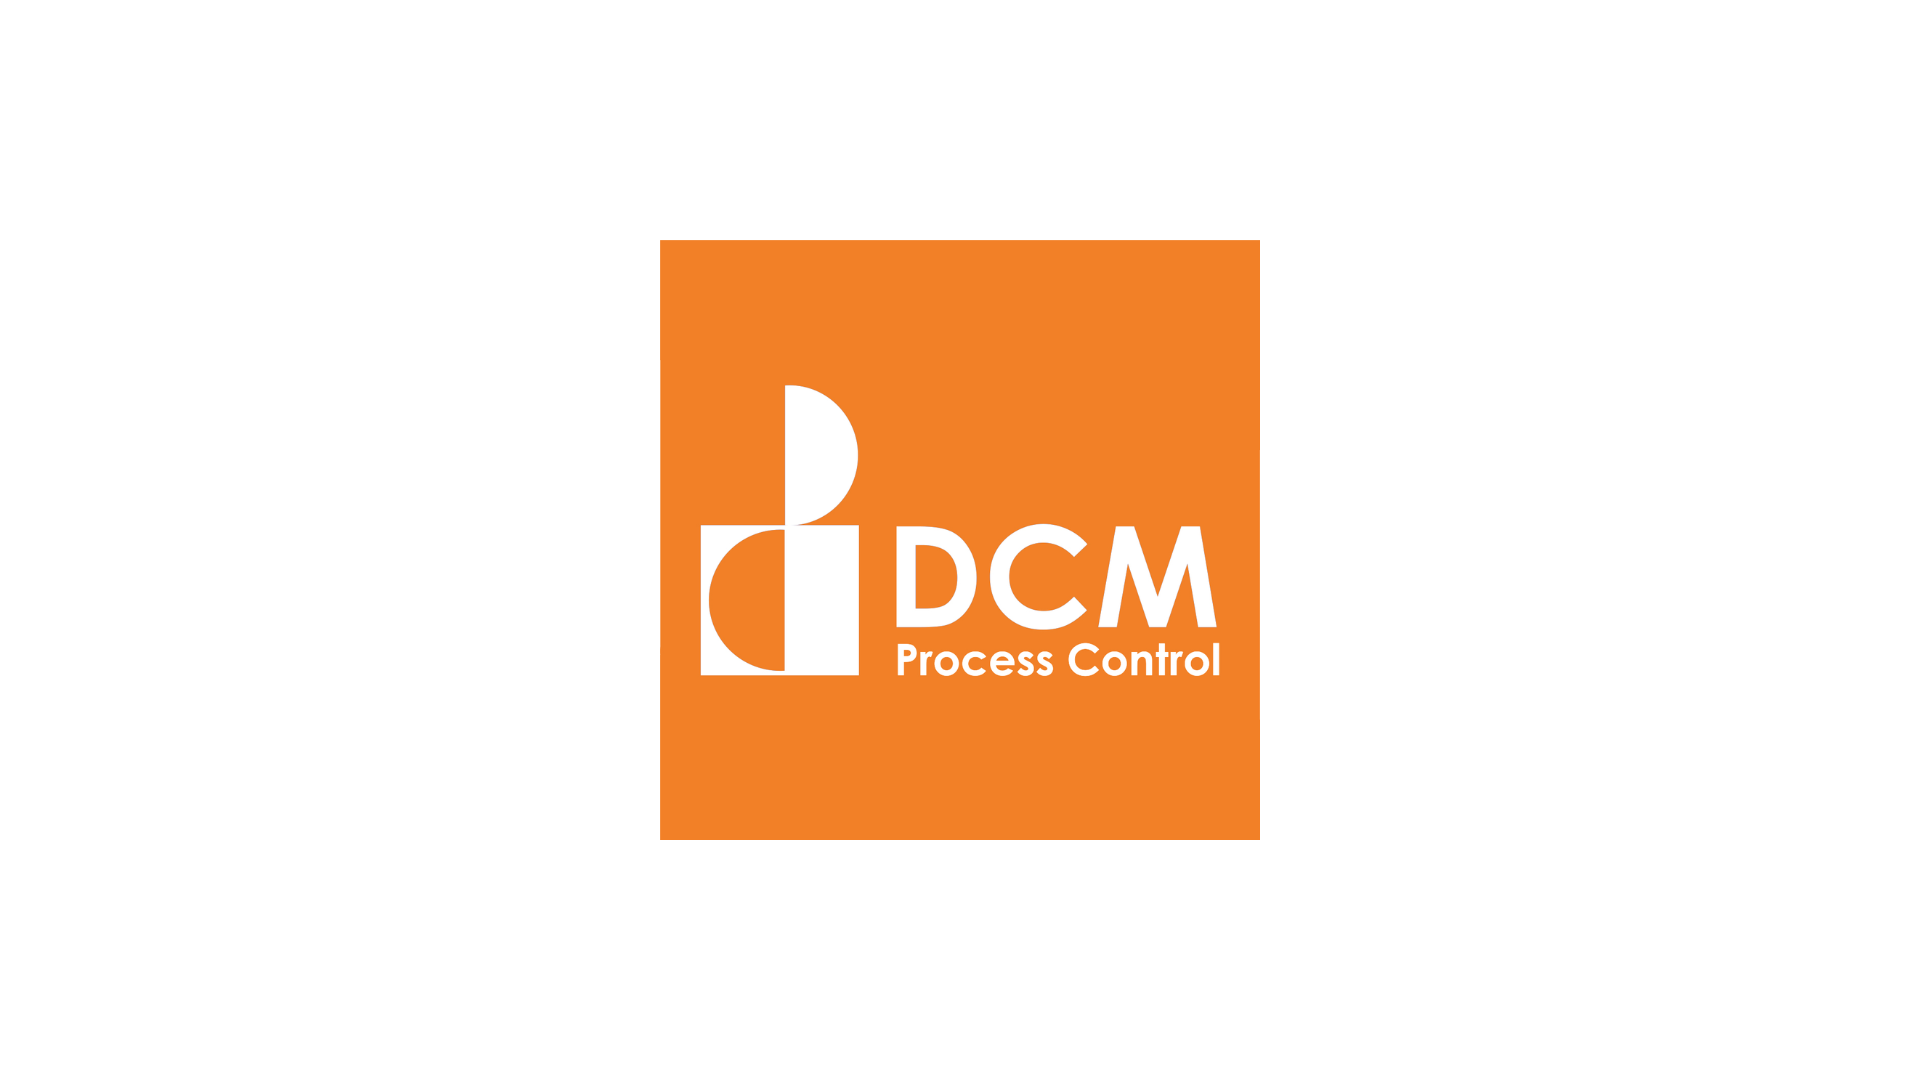 DCM Process Control